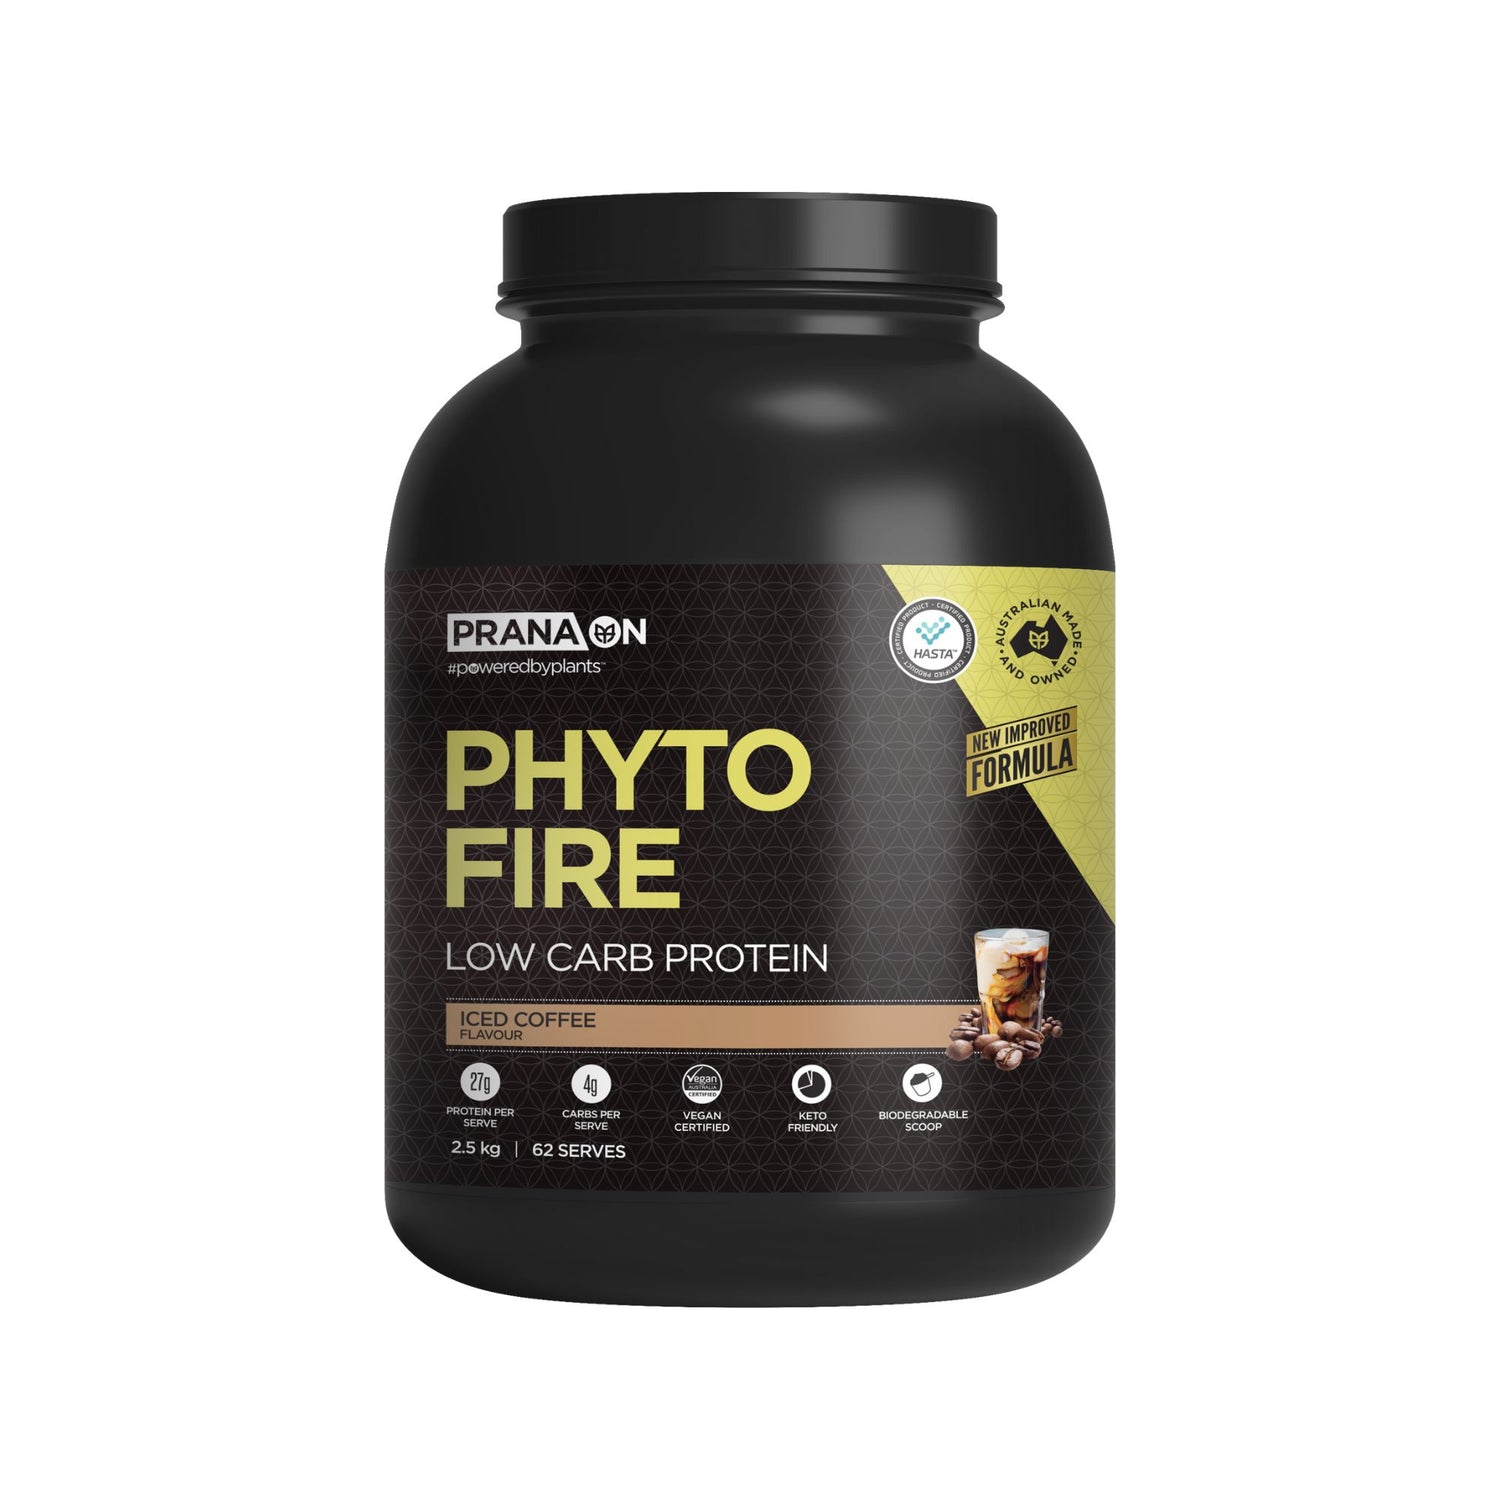 Prana On Phyto Fire 2.5kg - Iced Coffee